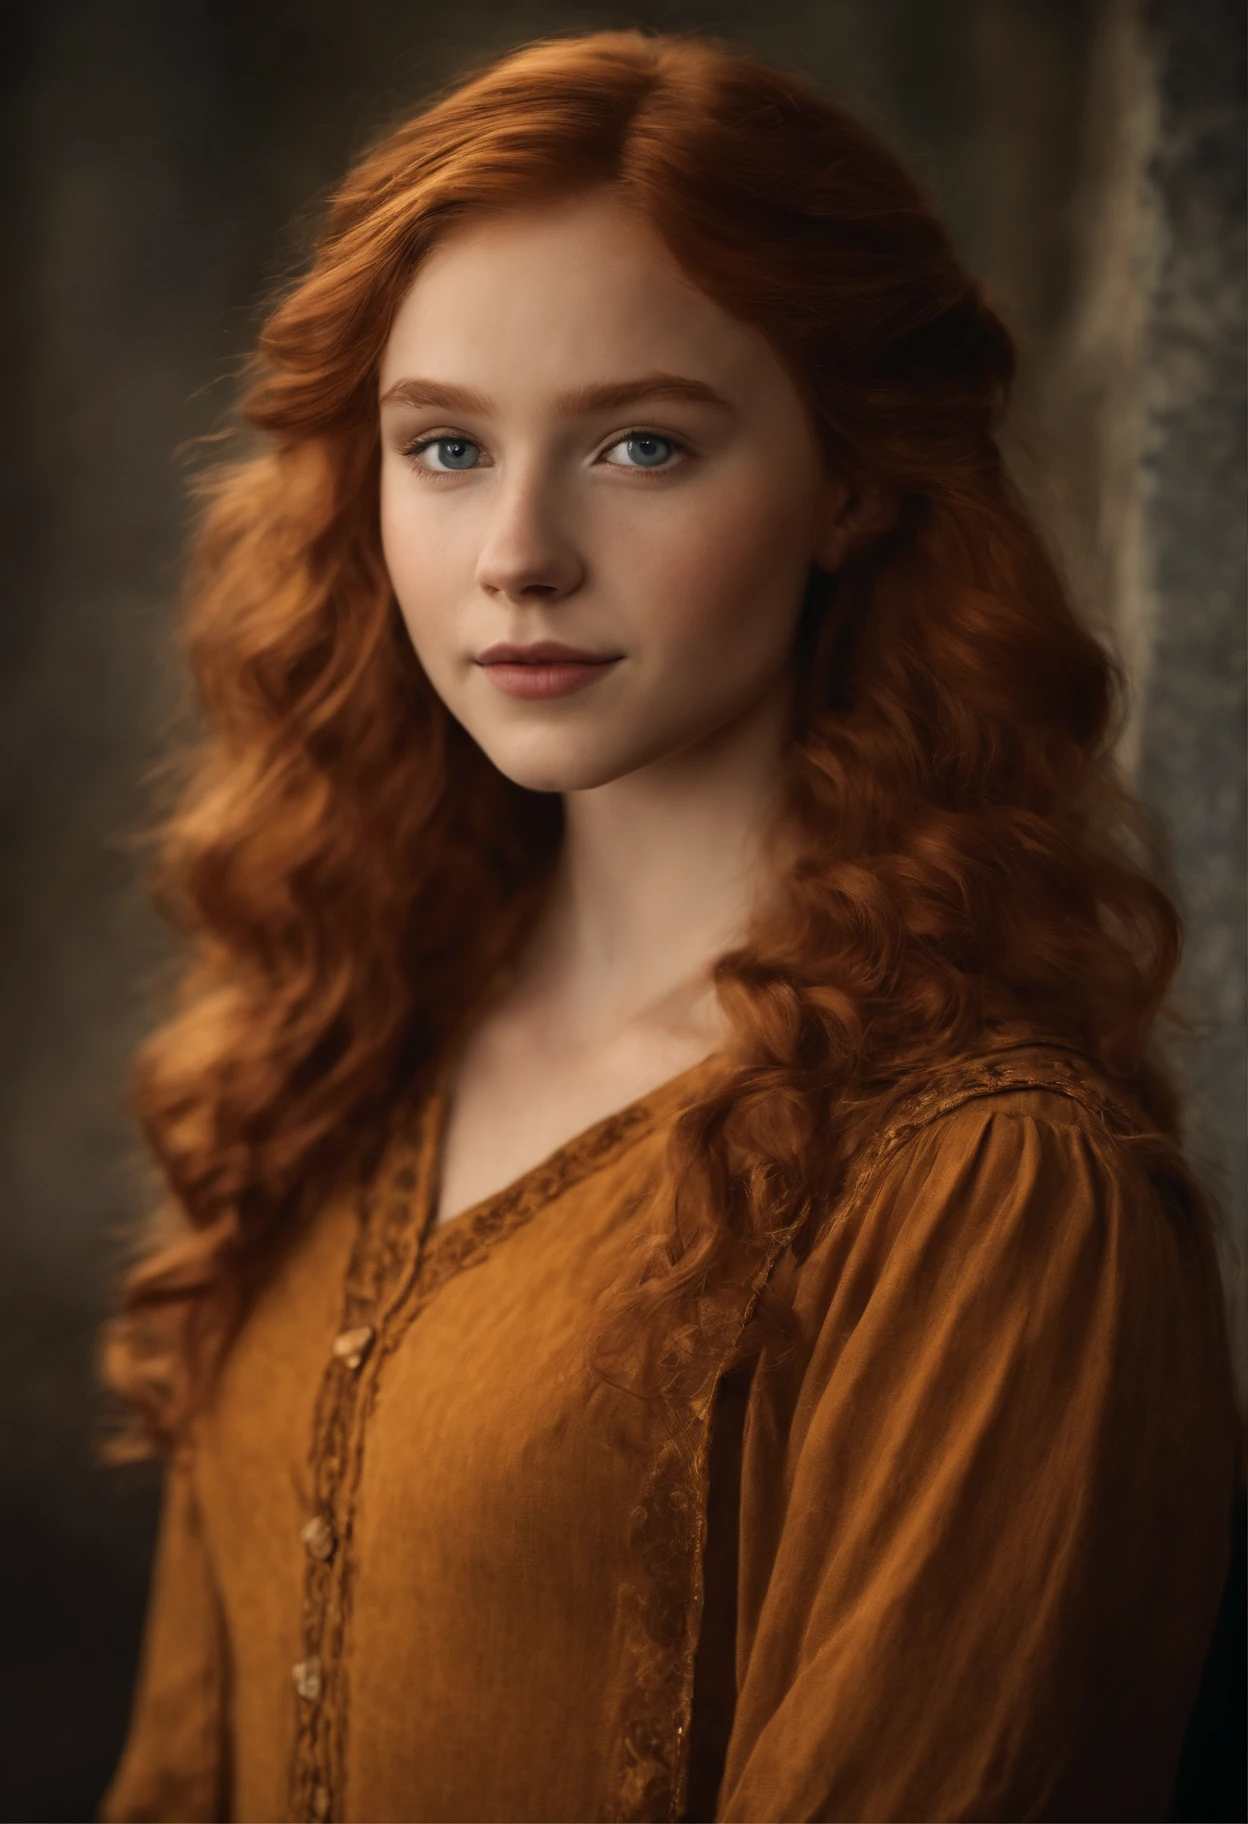 a portrait of ron weasley, fantasy, sharp focus